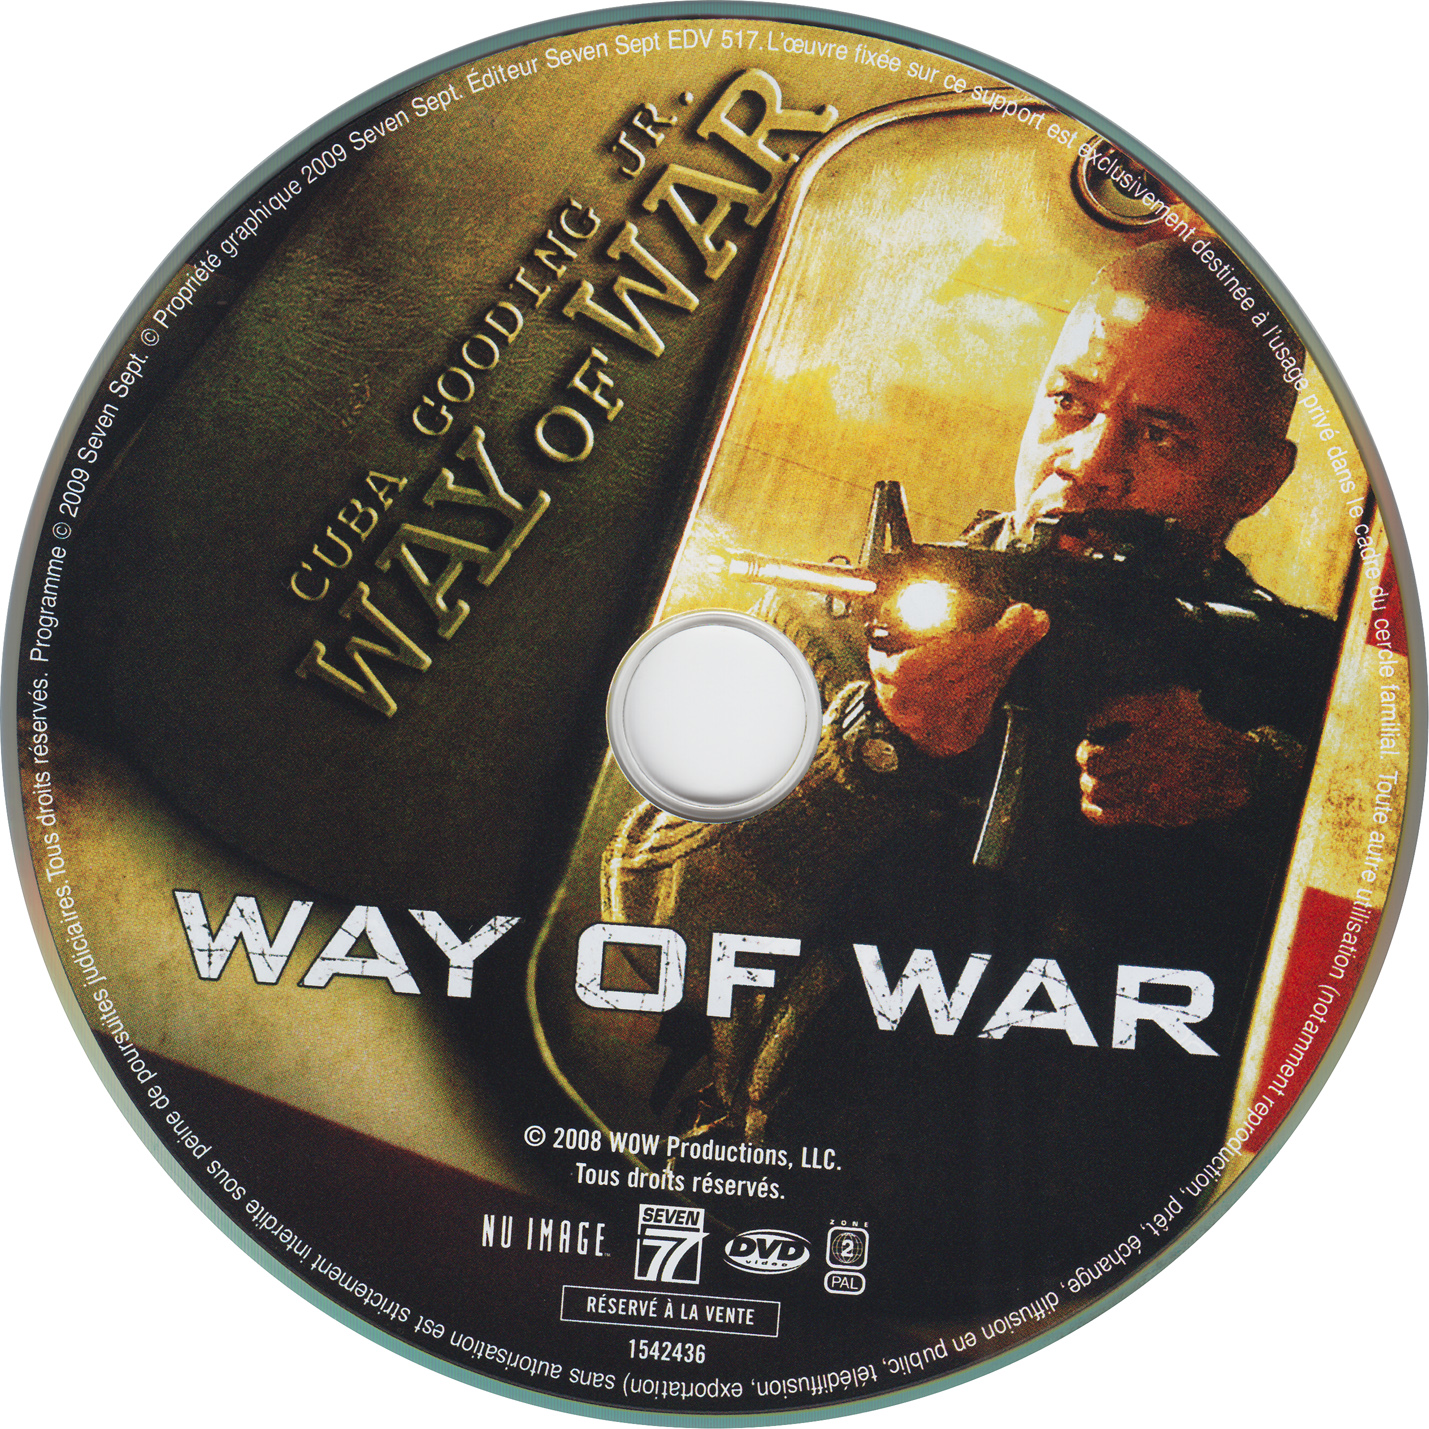 Way of war